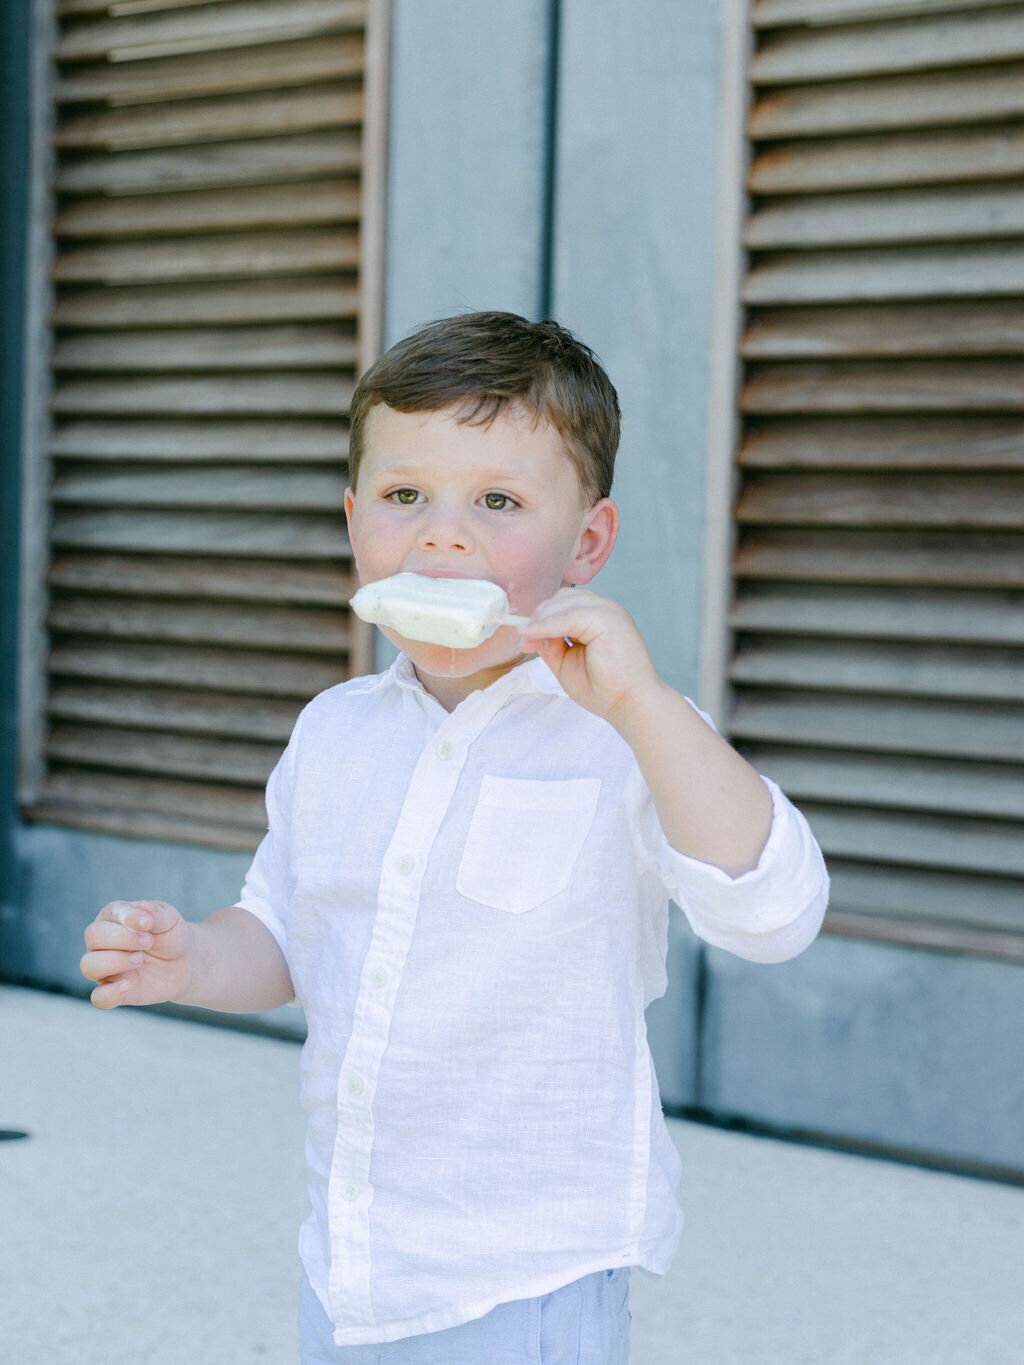 Boy eating an ice cream at summer wedding at Rosemary beach Florida